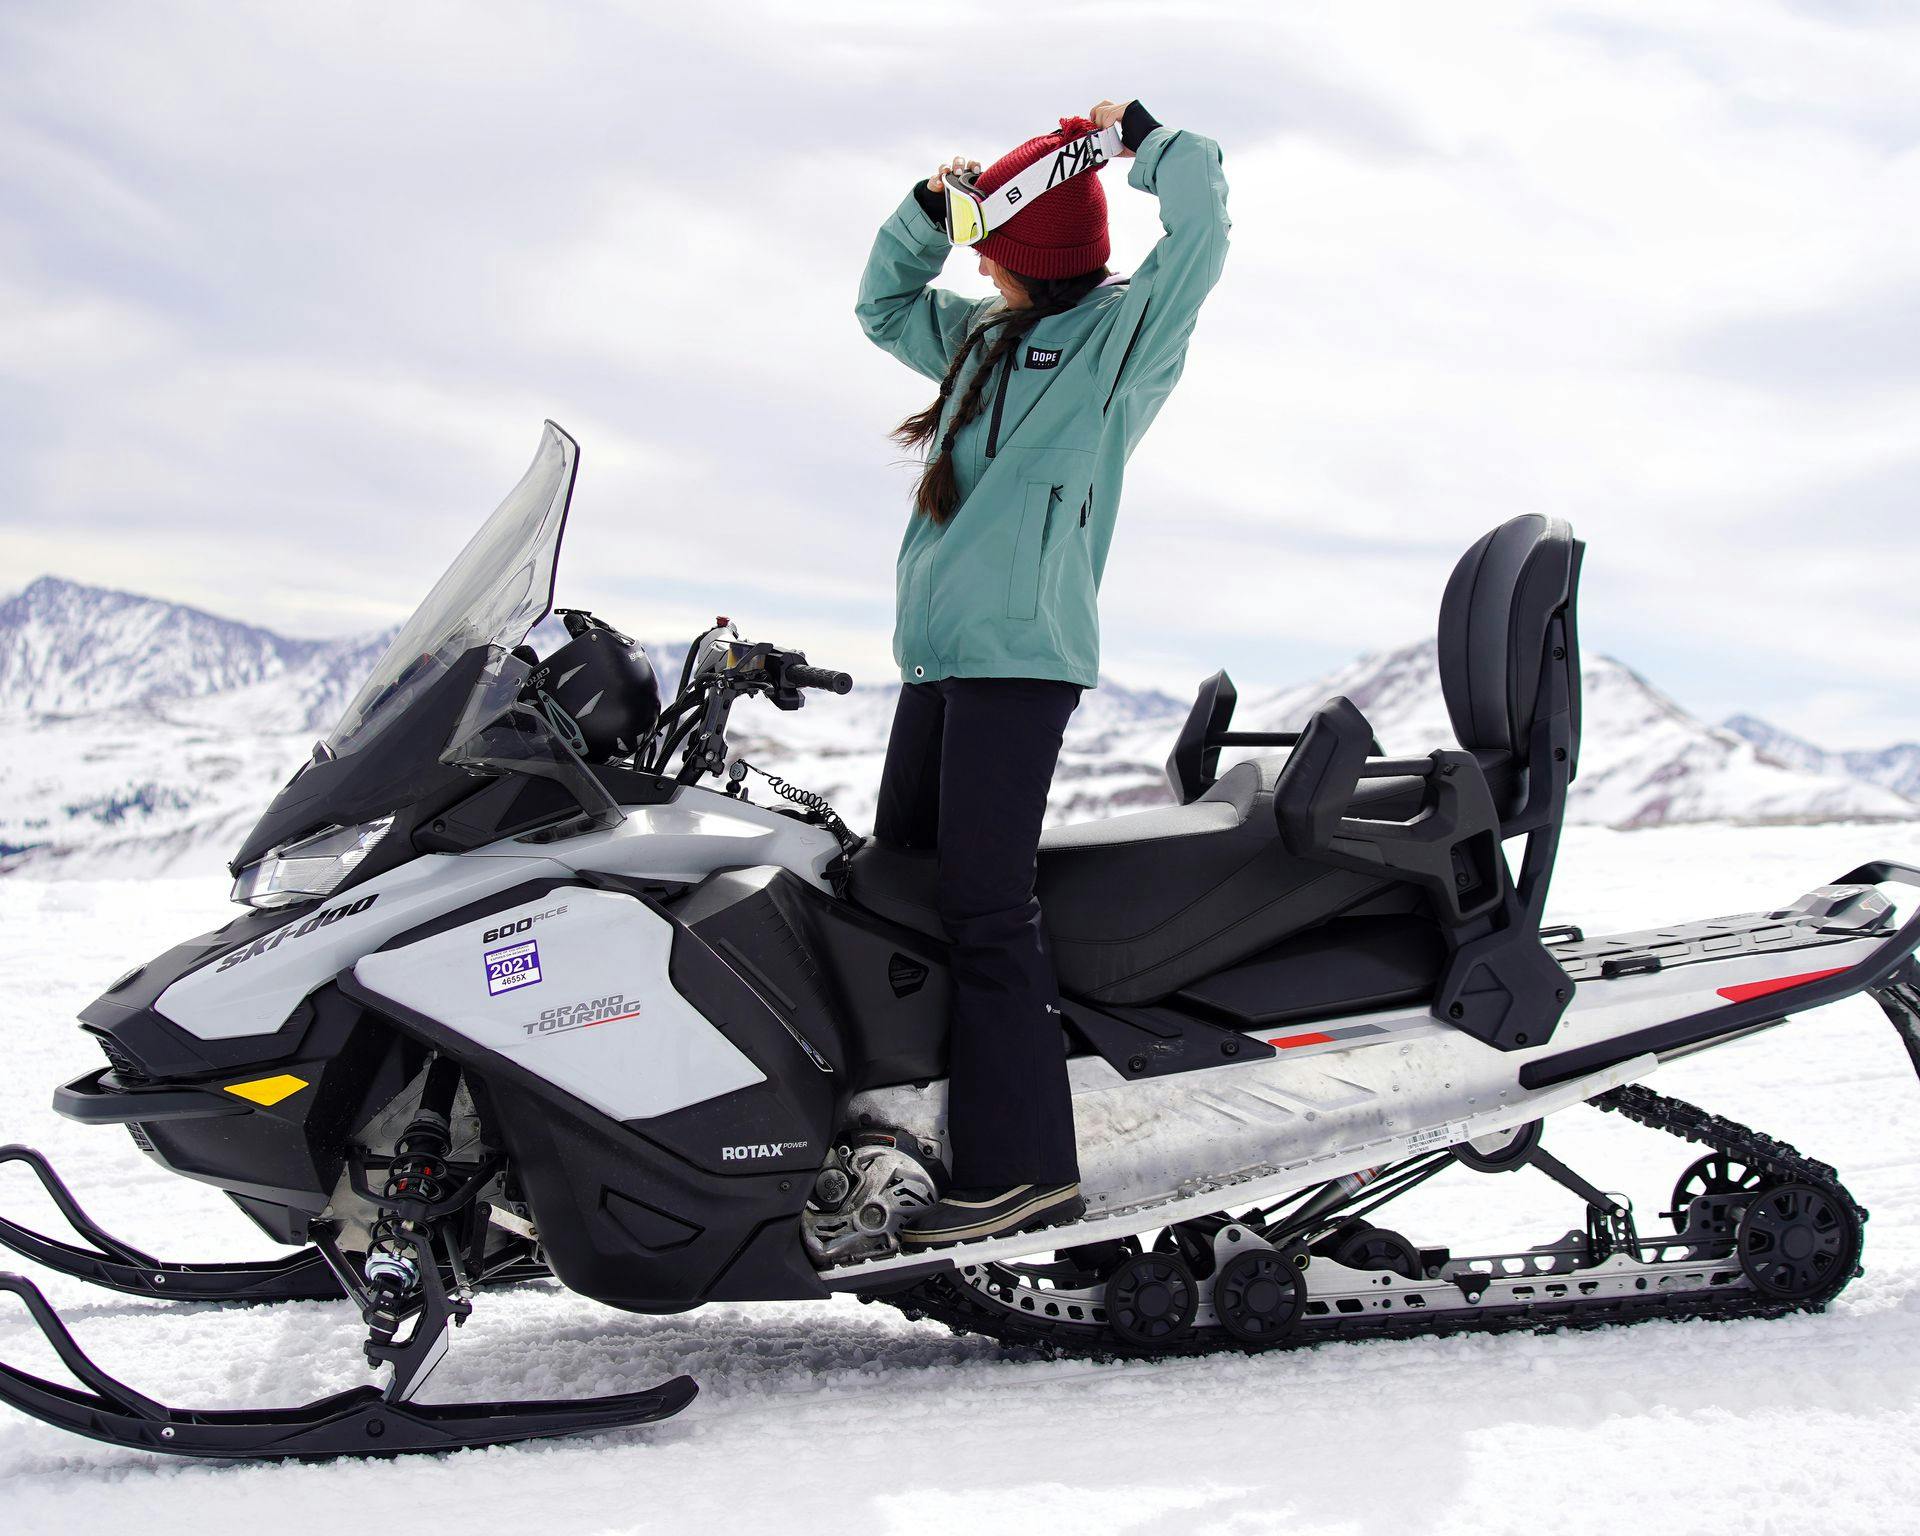 Bukitt's co-founder riding a snowmobile at Vail, Colorado.